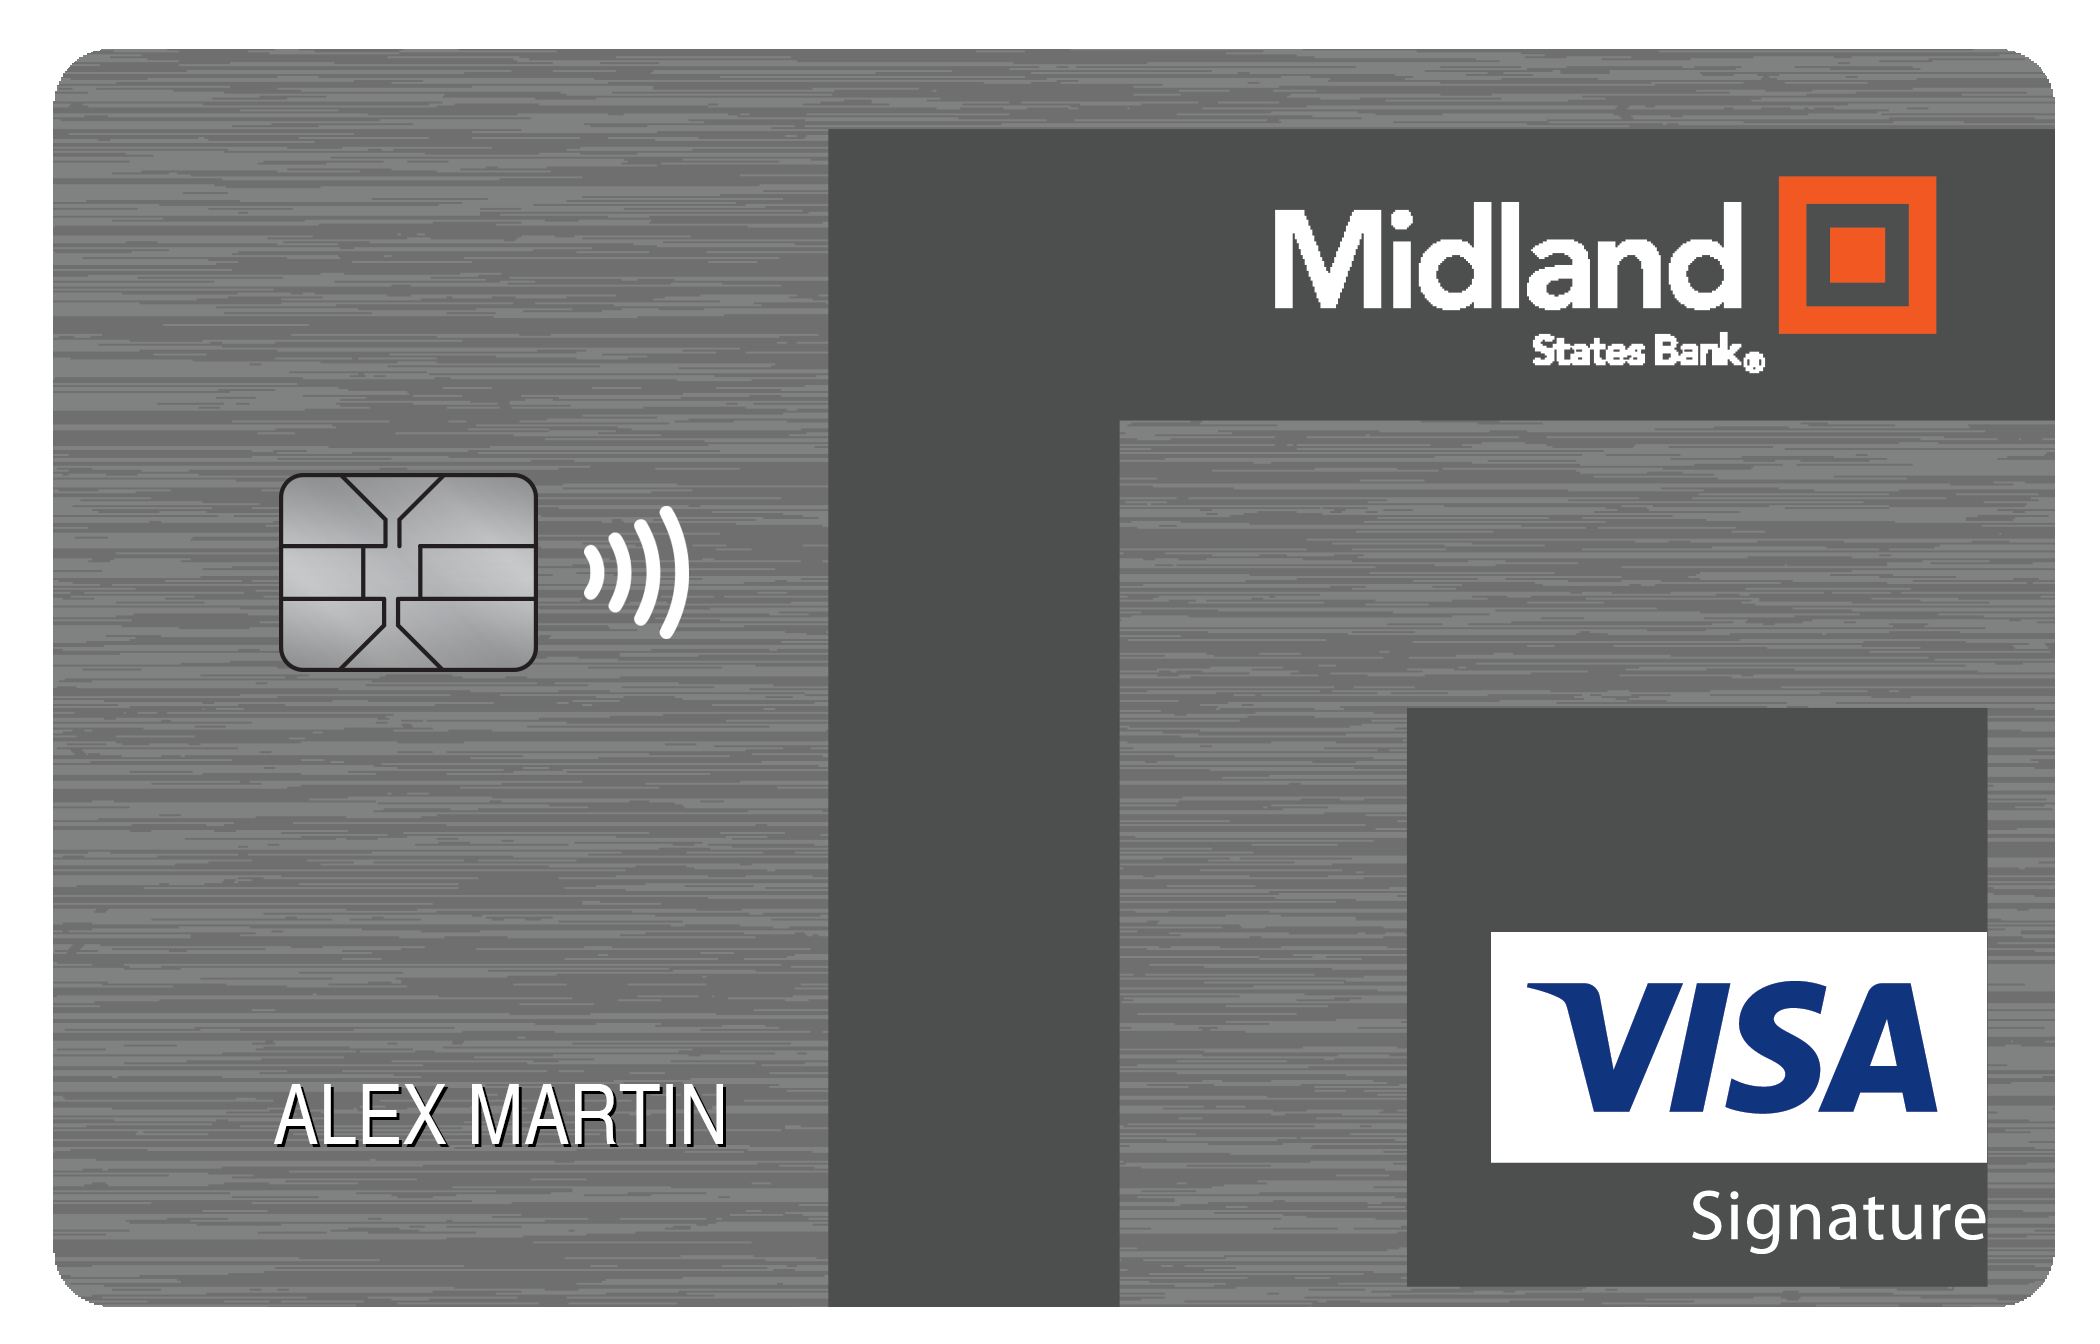 Midland States Bank Travel Rewards+ Card